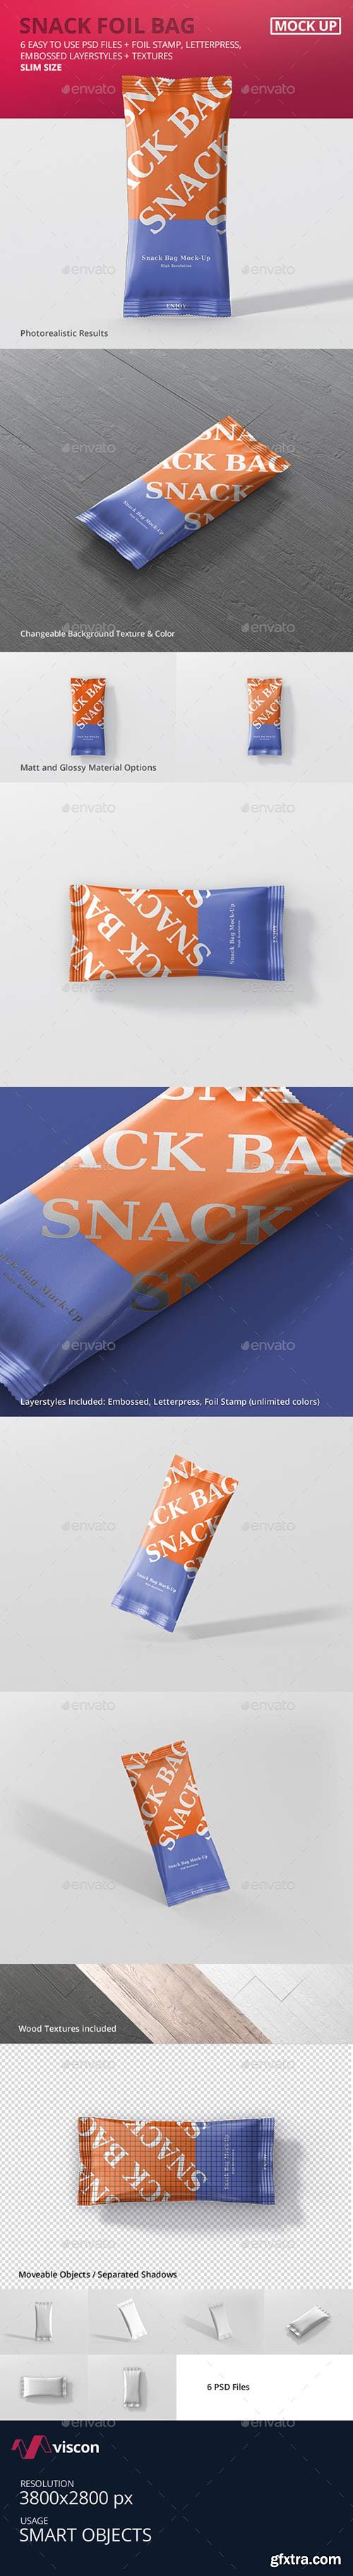 Graphicriver - Snack Foil Bag Mockup - Slim Size 20236420